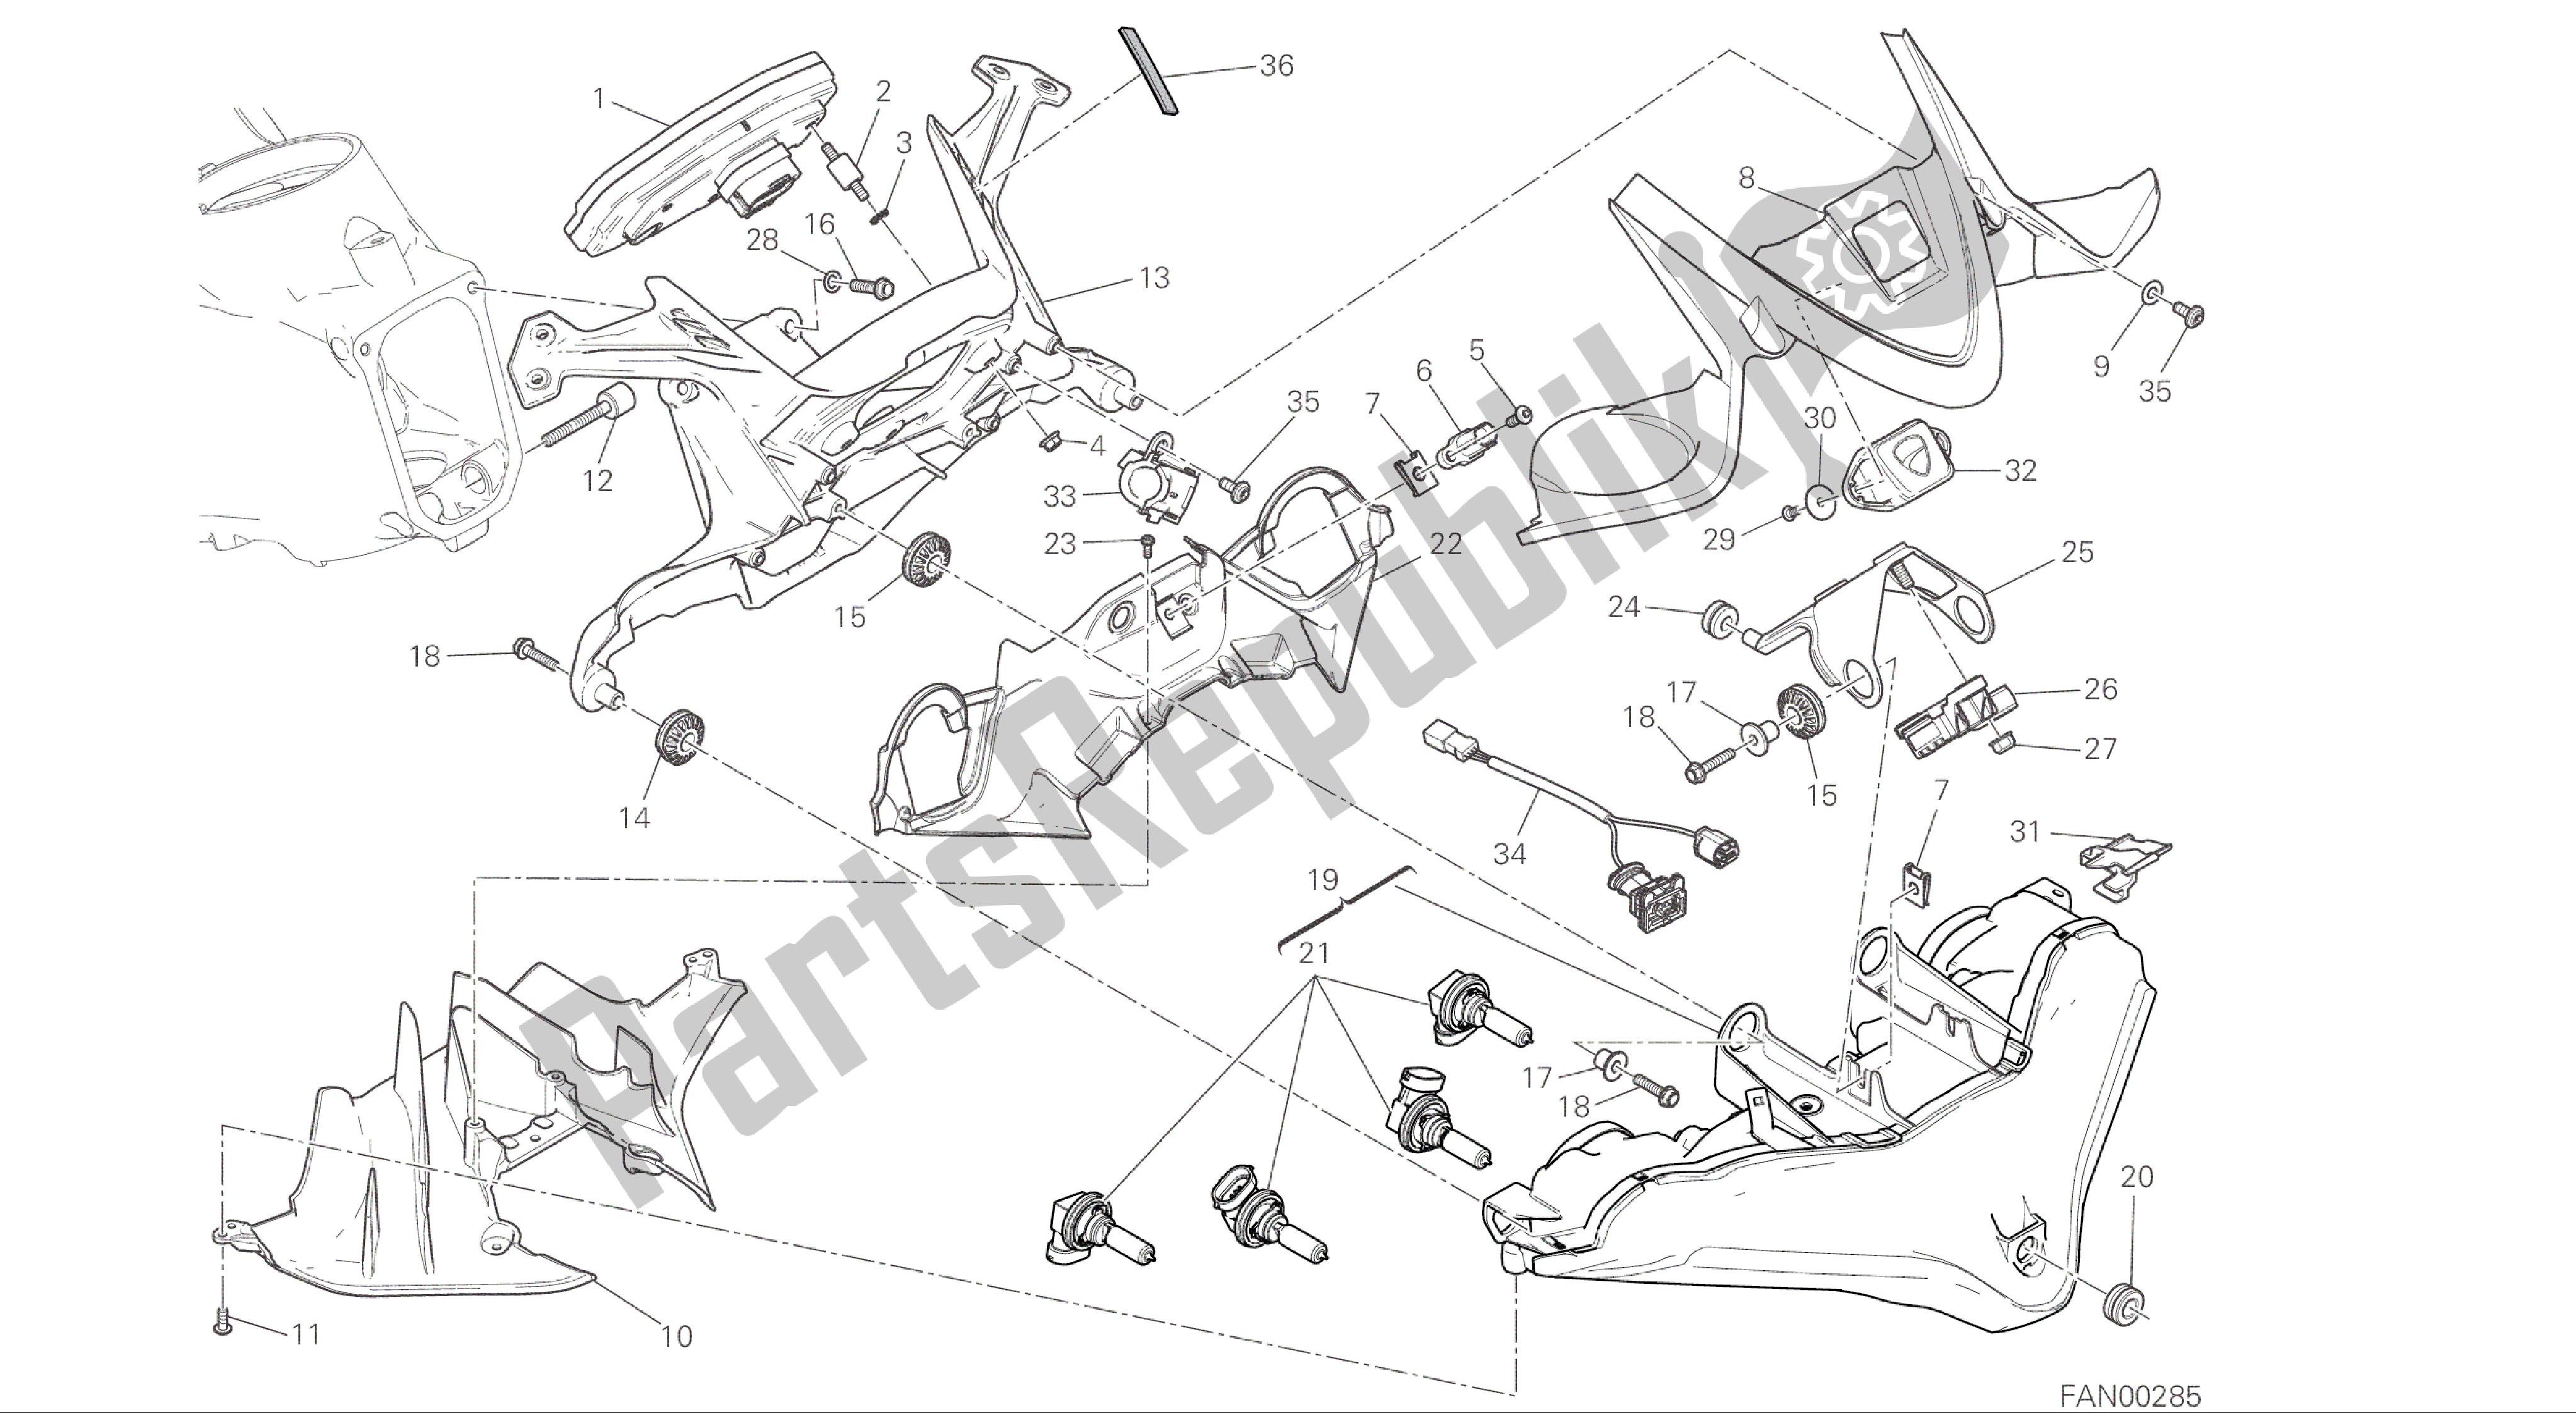 Alle onderdelen voor de Tekening 020 - Fanale Anteriore E Cruscotto [mod: 1299; Xst: Aus, Eur, Fra, Jap, Twn] Groepsframe van de Ducati Panigale ABS 1299 2016